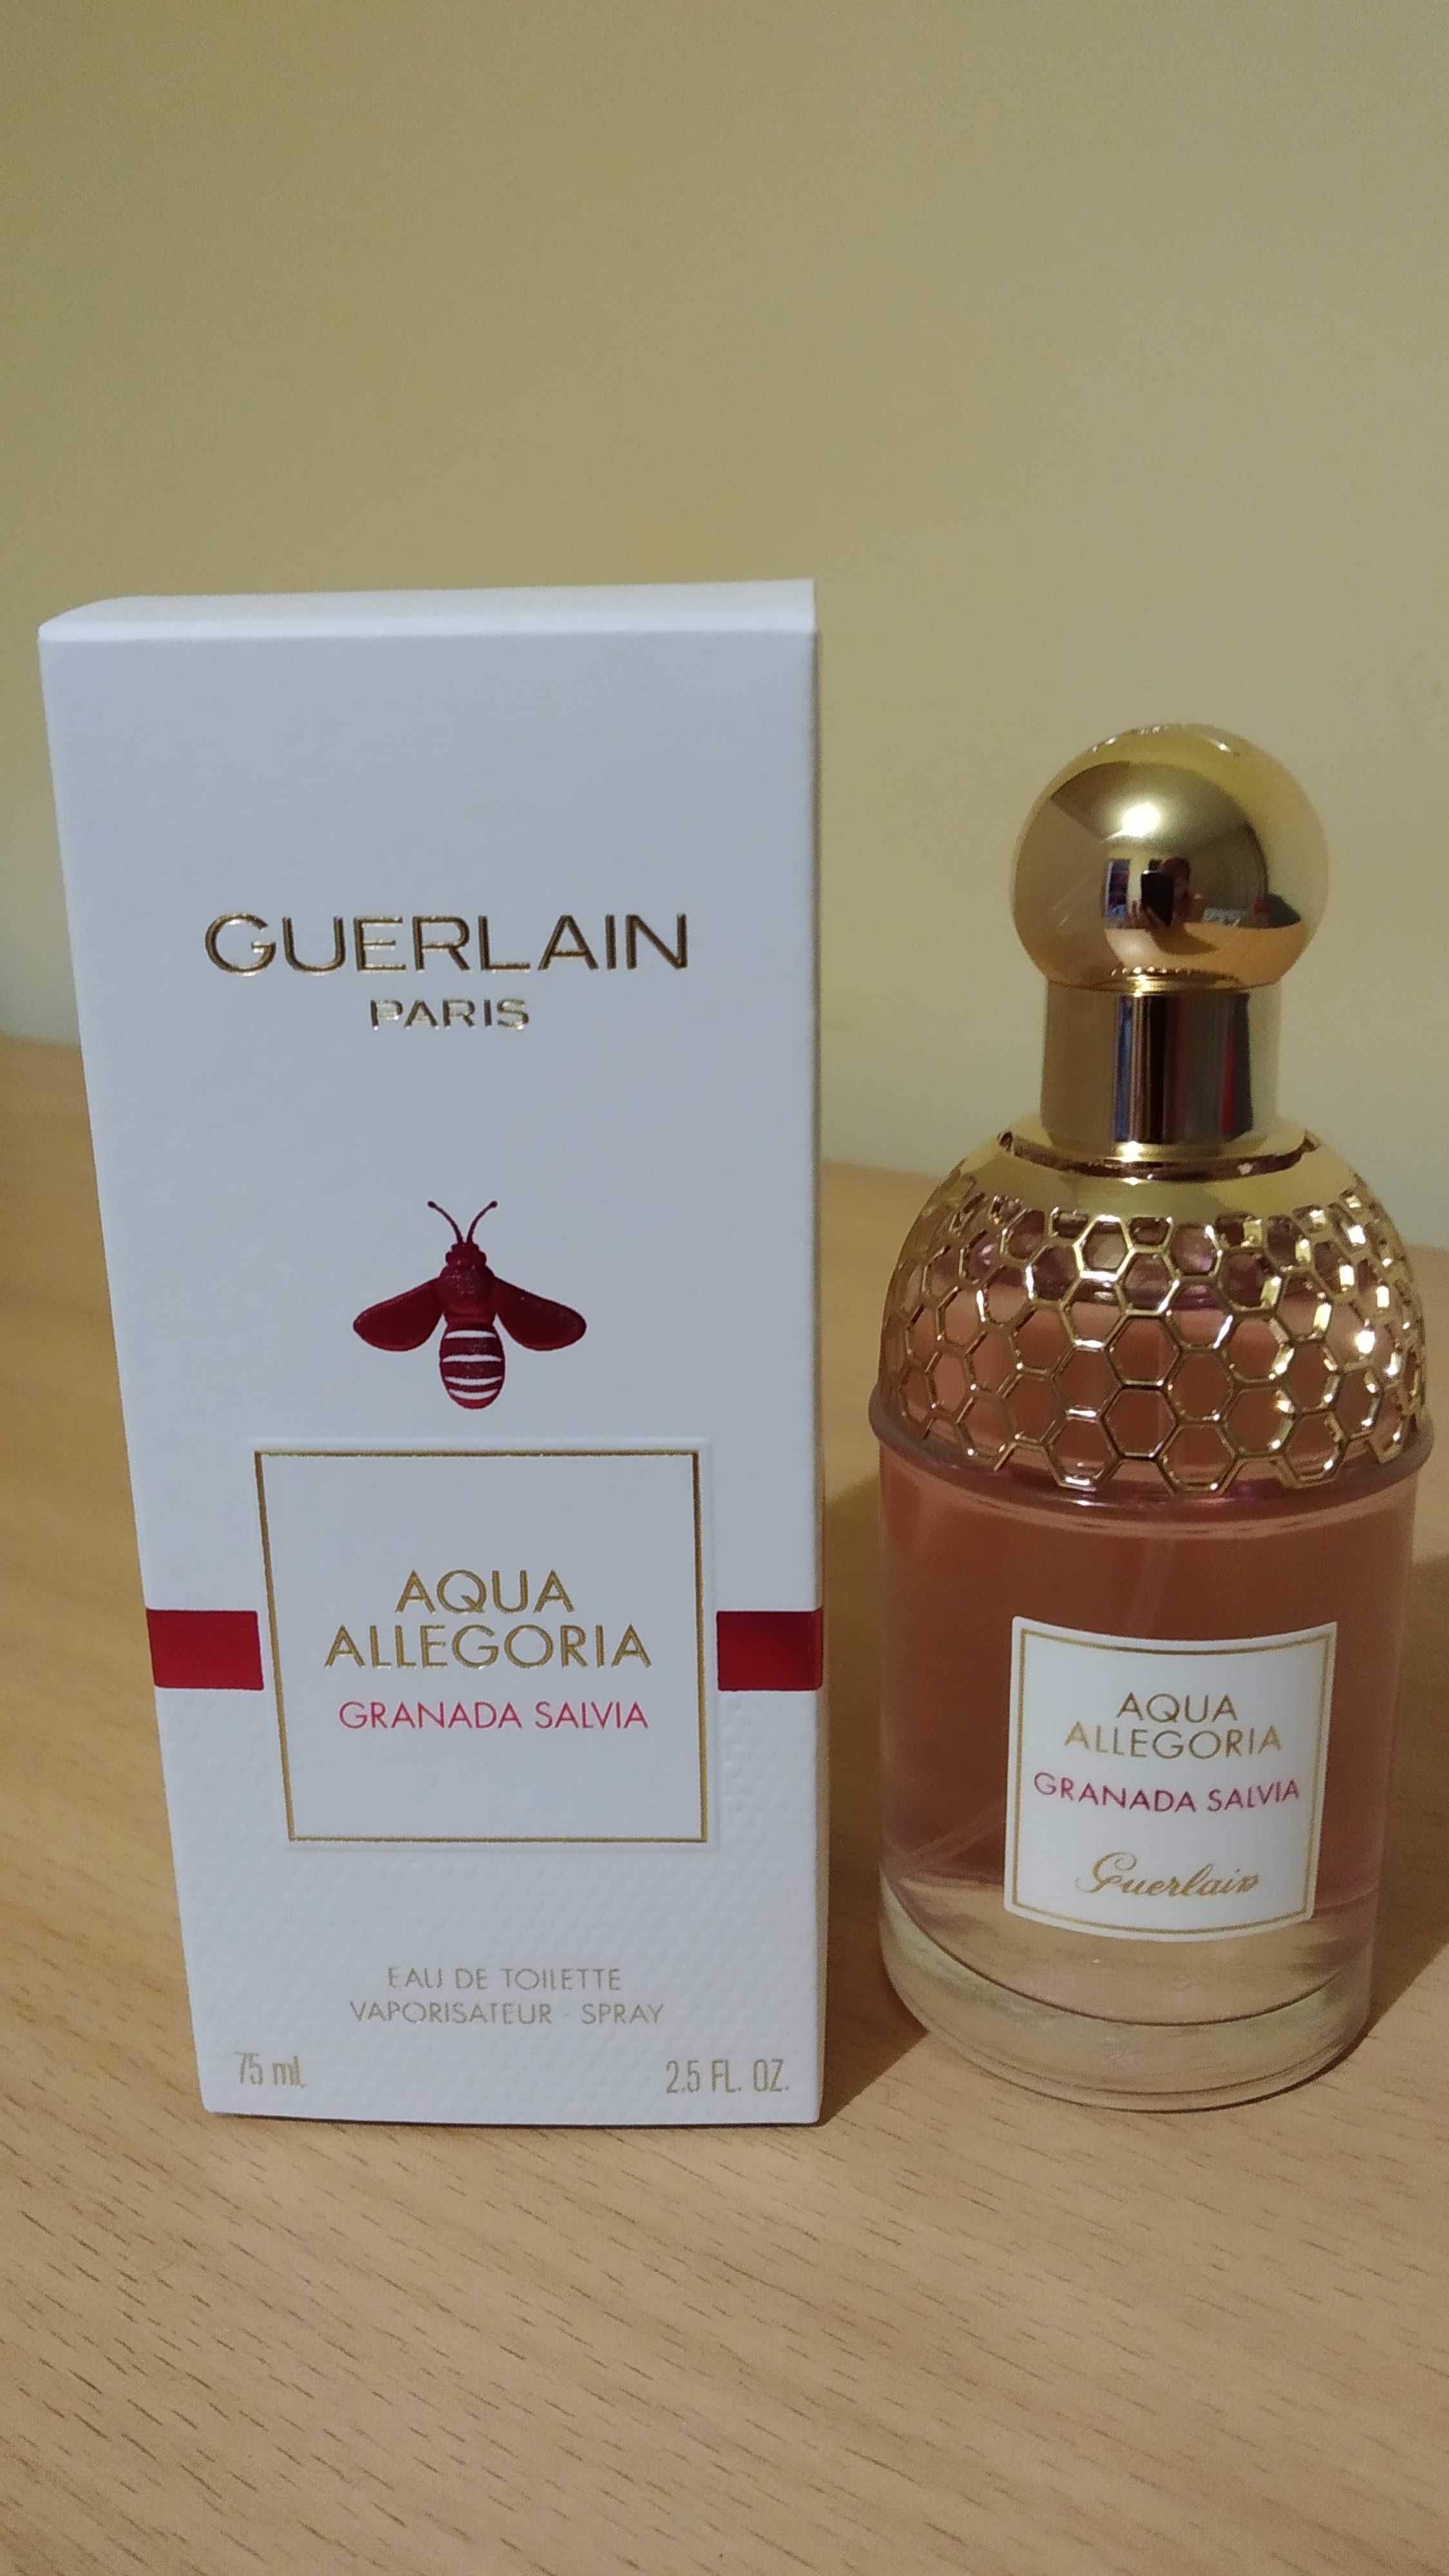 Продам парфюм Guerlain Aqua Allegoria Granada Salvia. Оригинал.